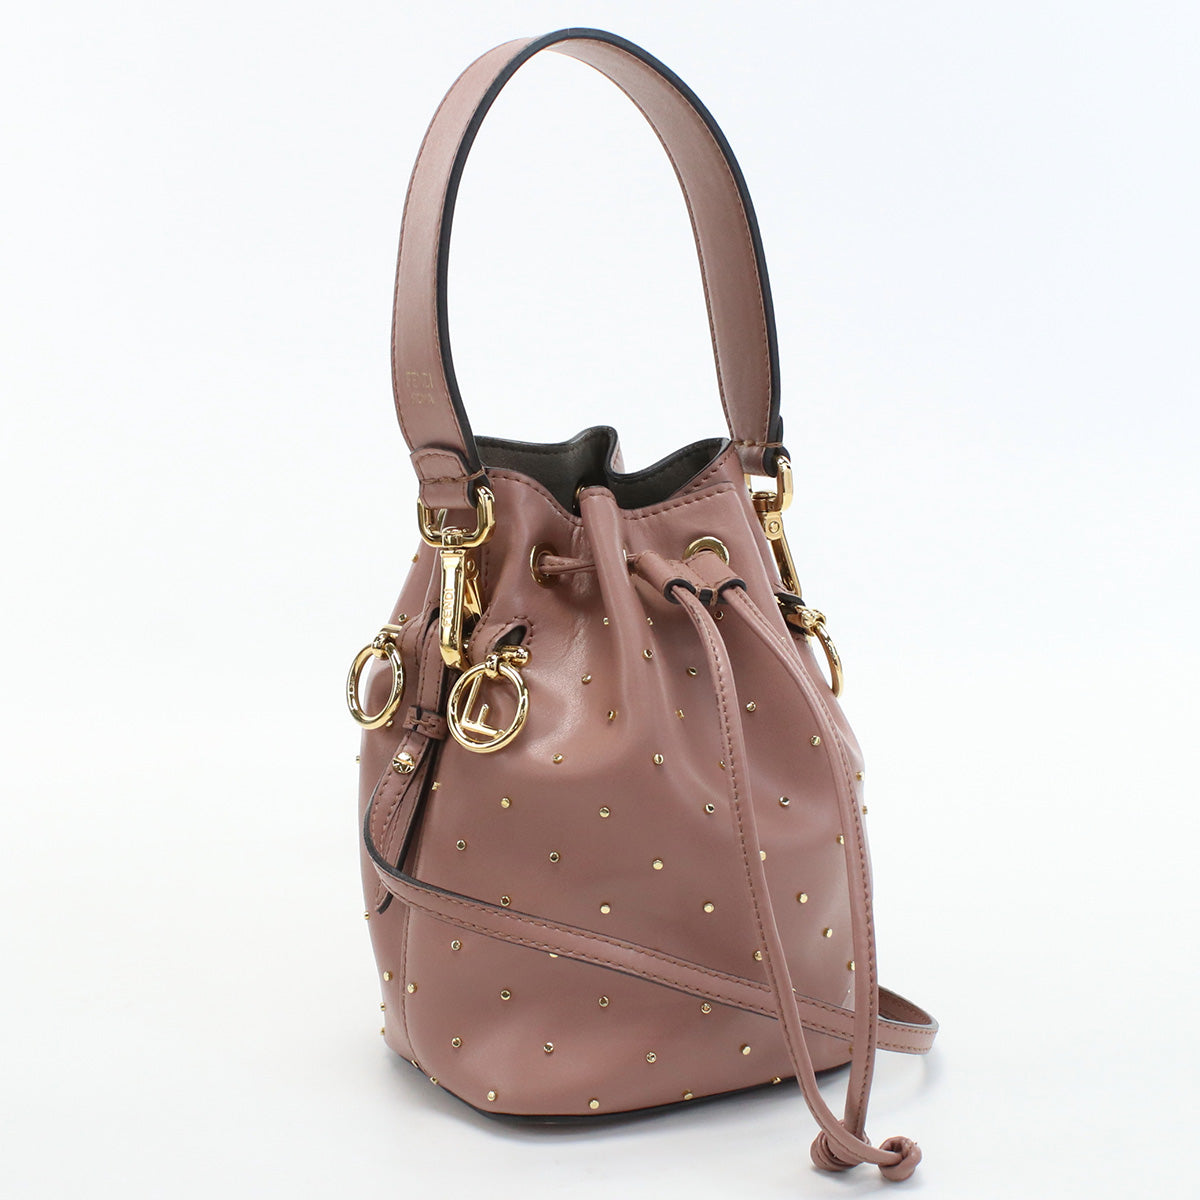 FENDI 8BS010 mini montresor studs Handbag Shoulder Bag Pink leather Wo